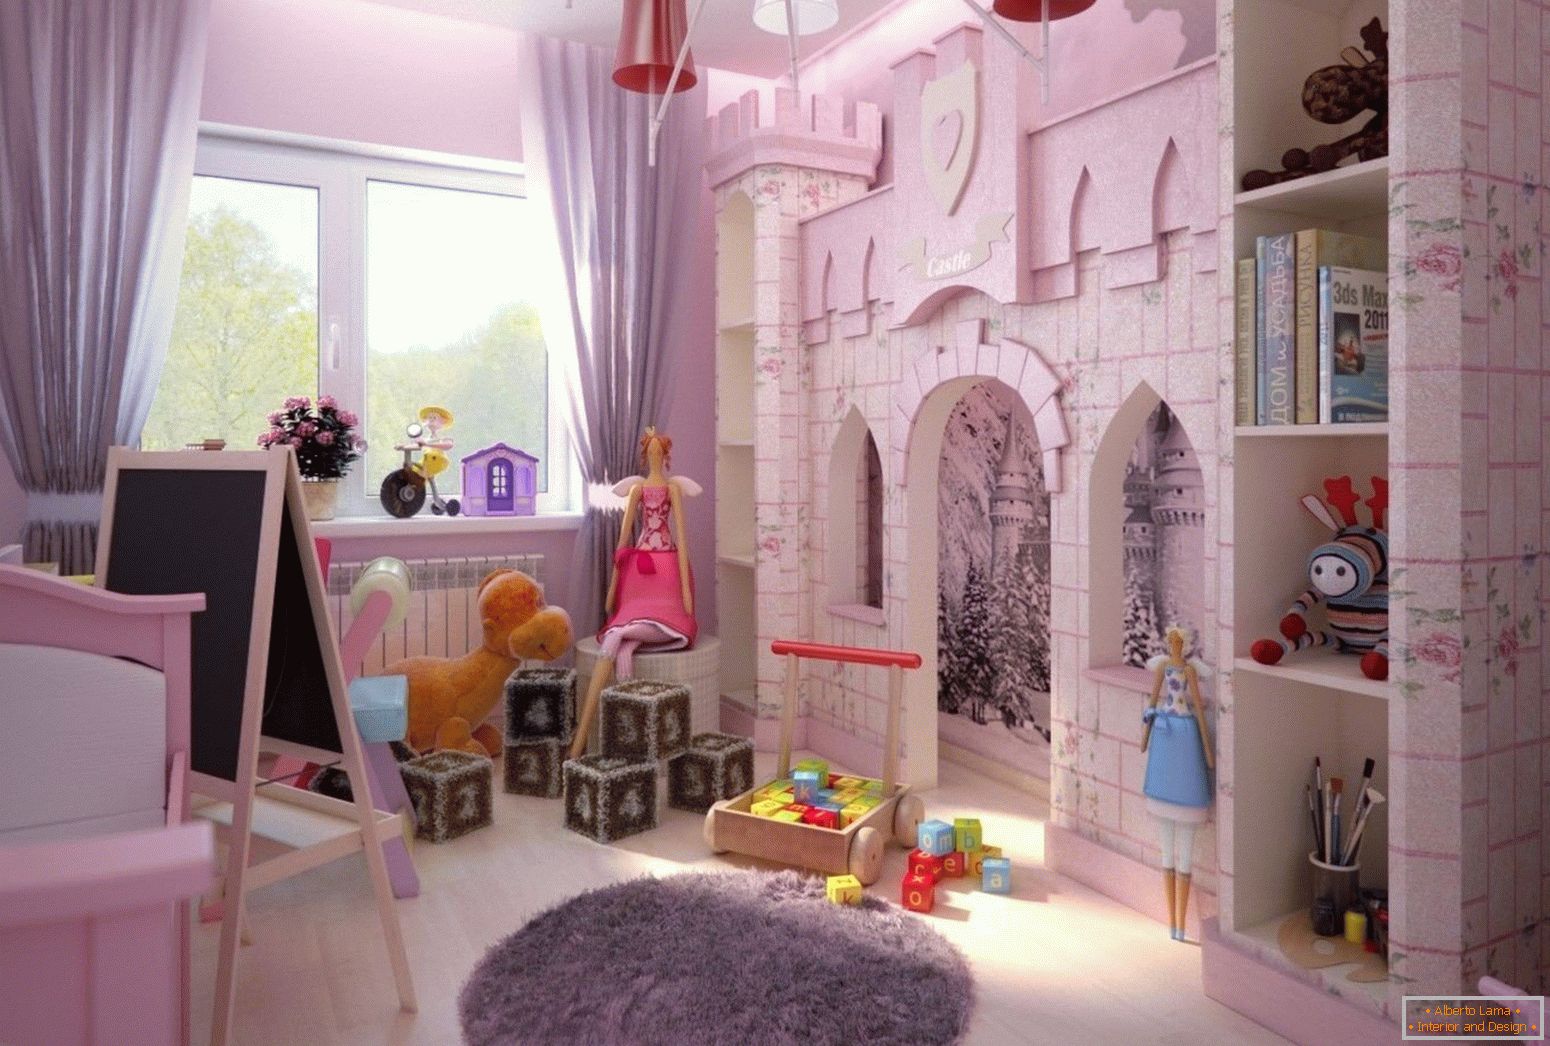 Schloss im Inneren des Kinderzimmers